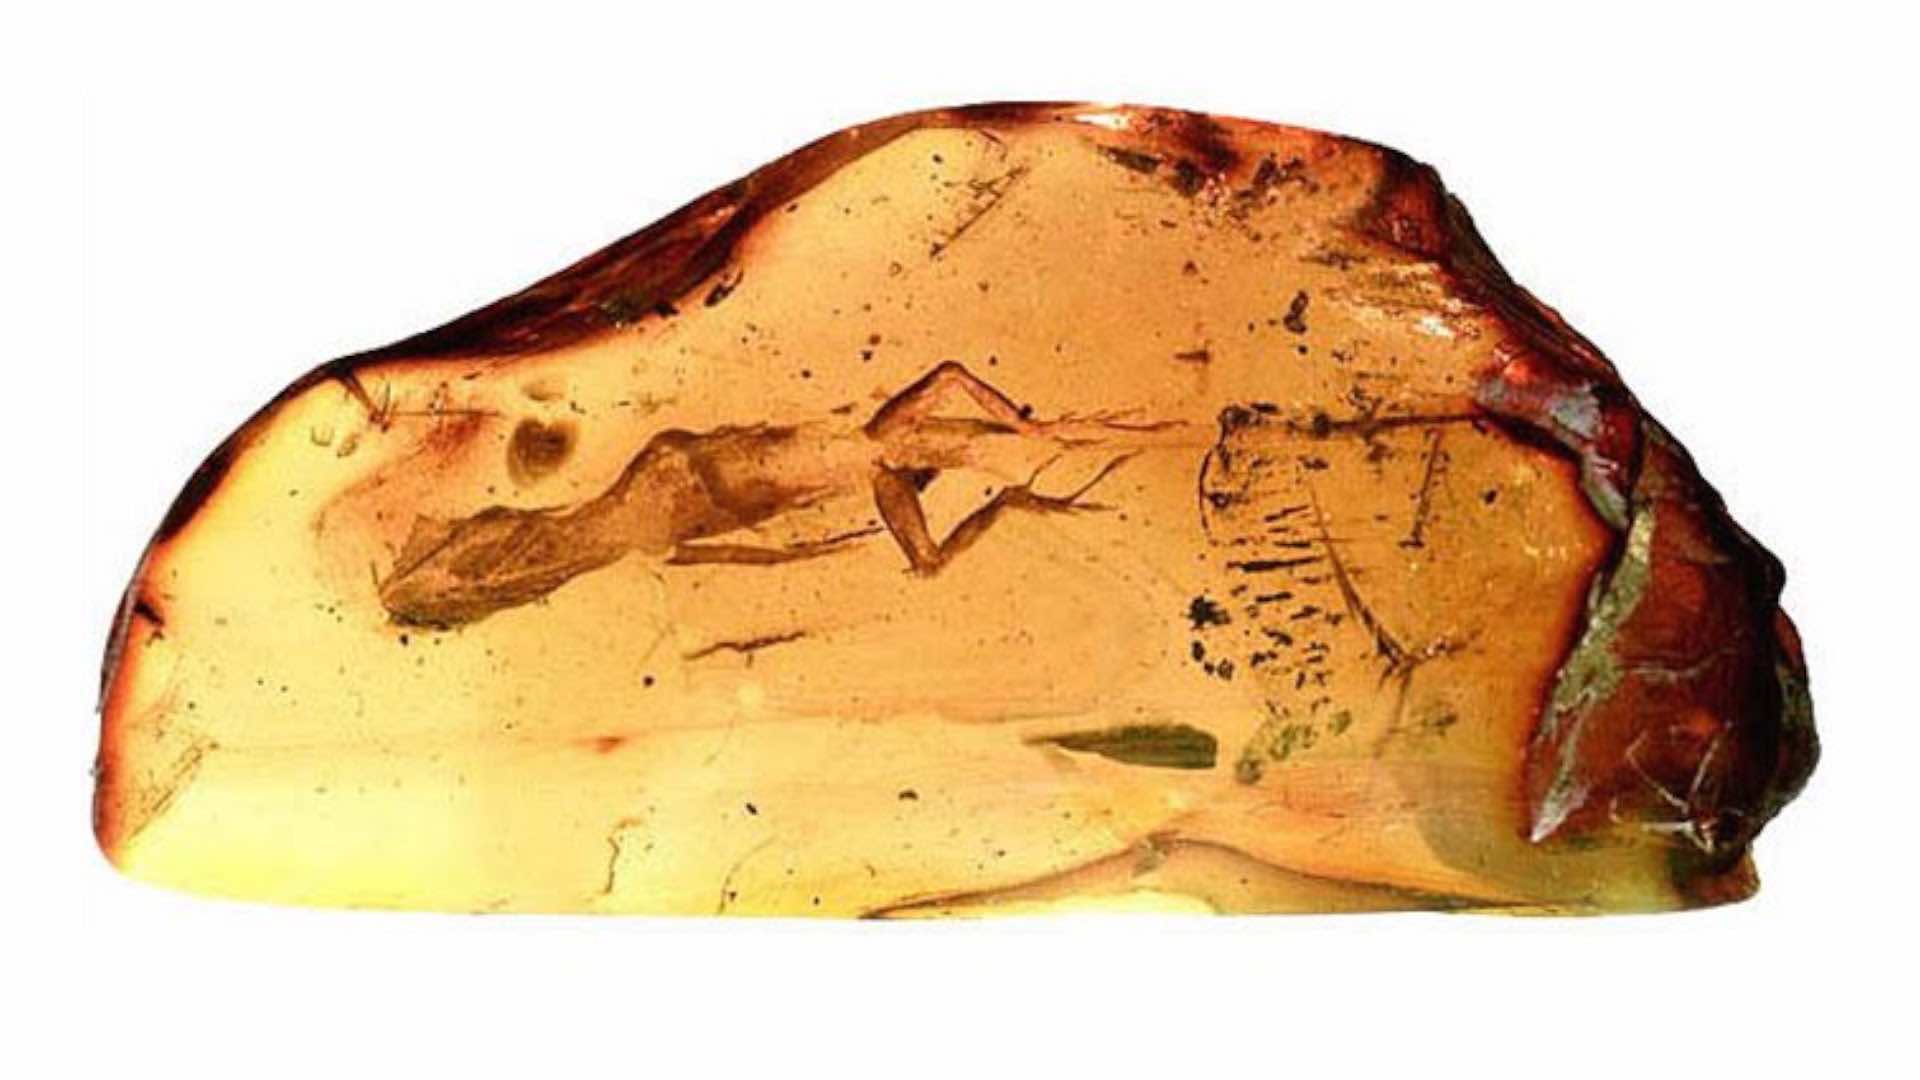 Amber preserves beetle 99 million years